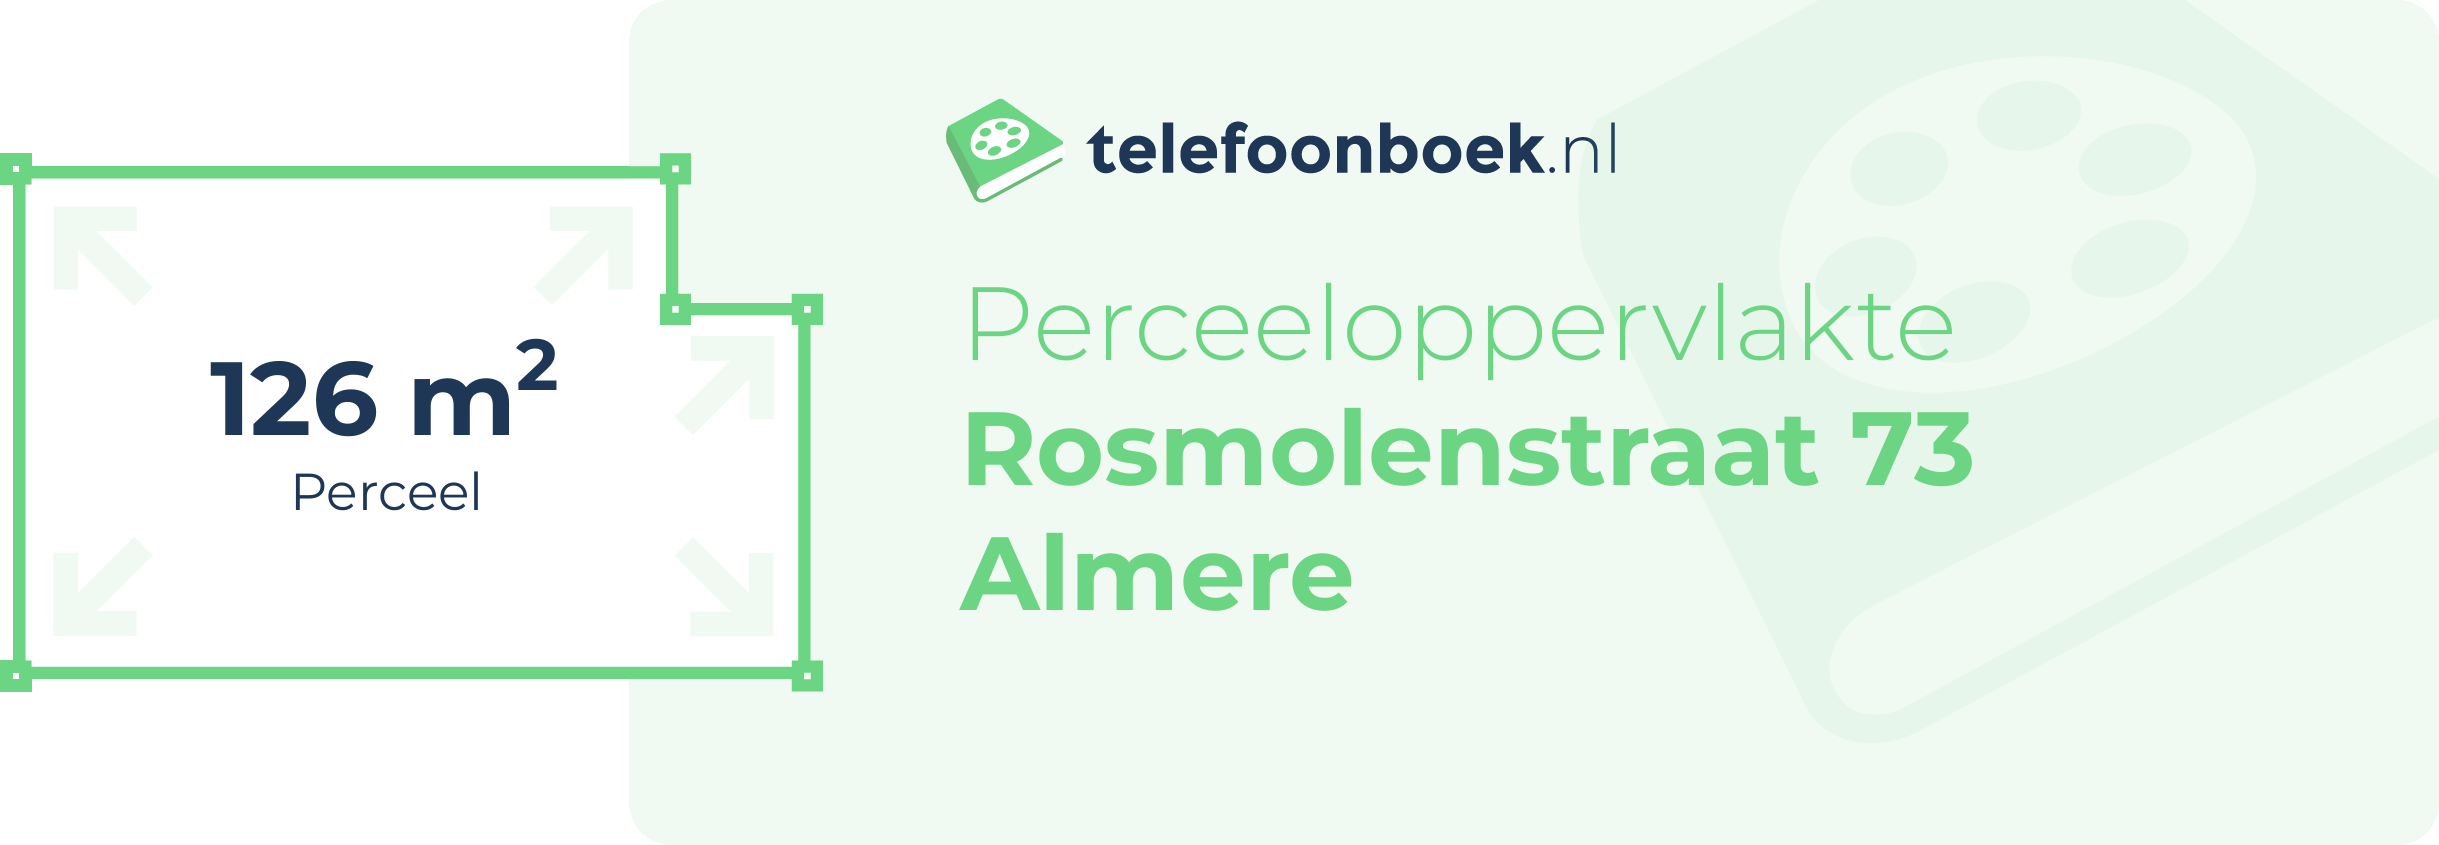 Perceeloppervlakte Rosmolenstraat 73 Almere